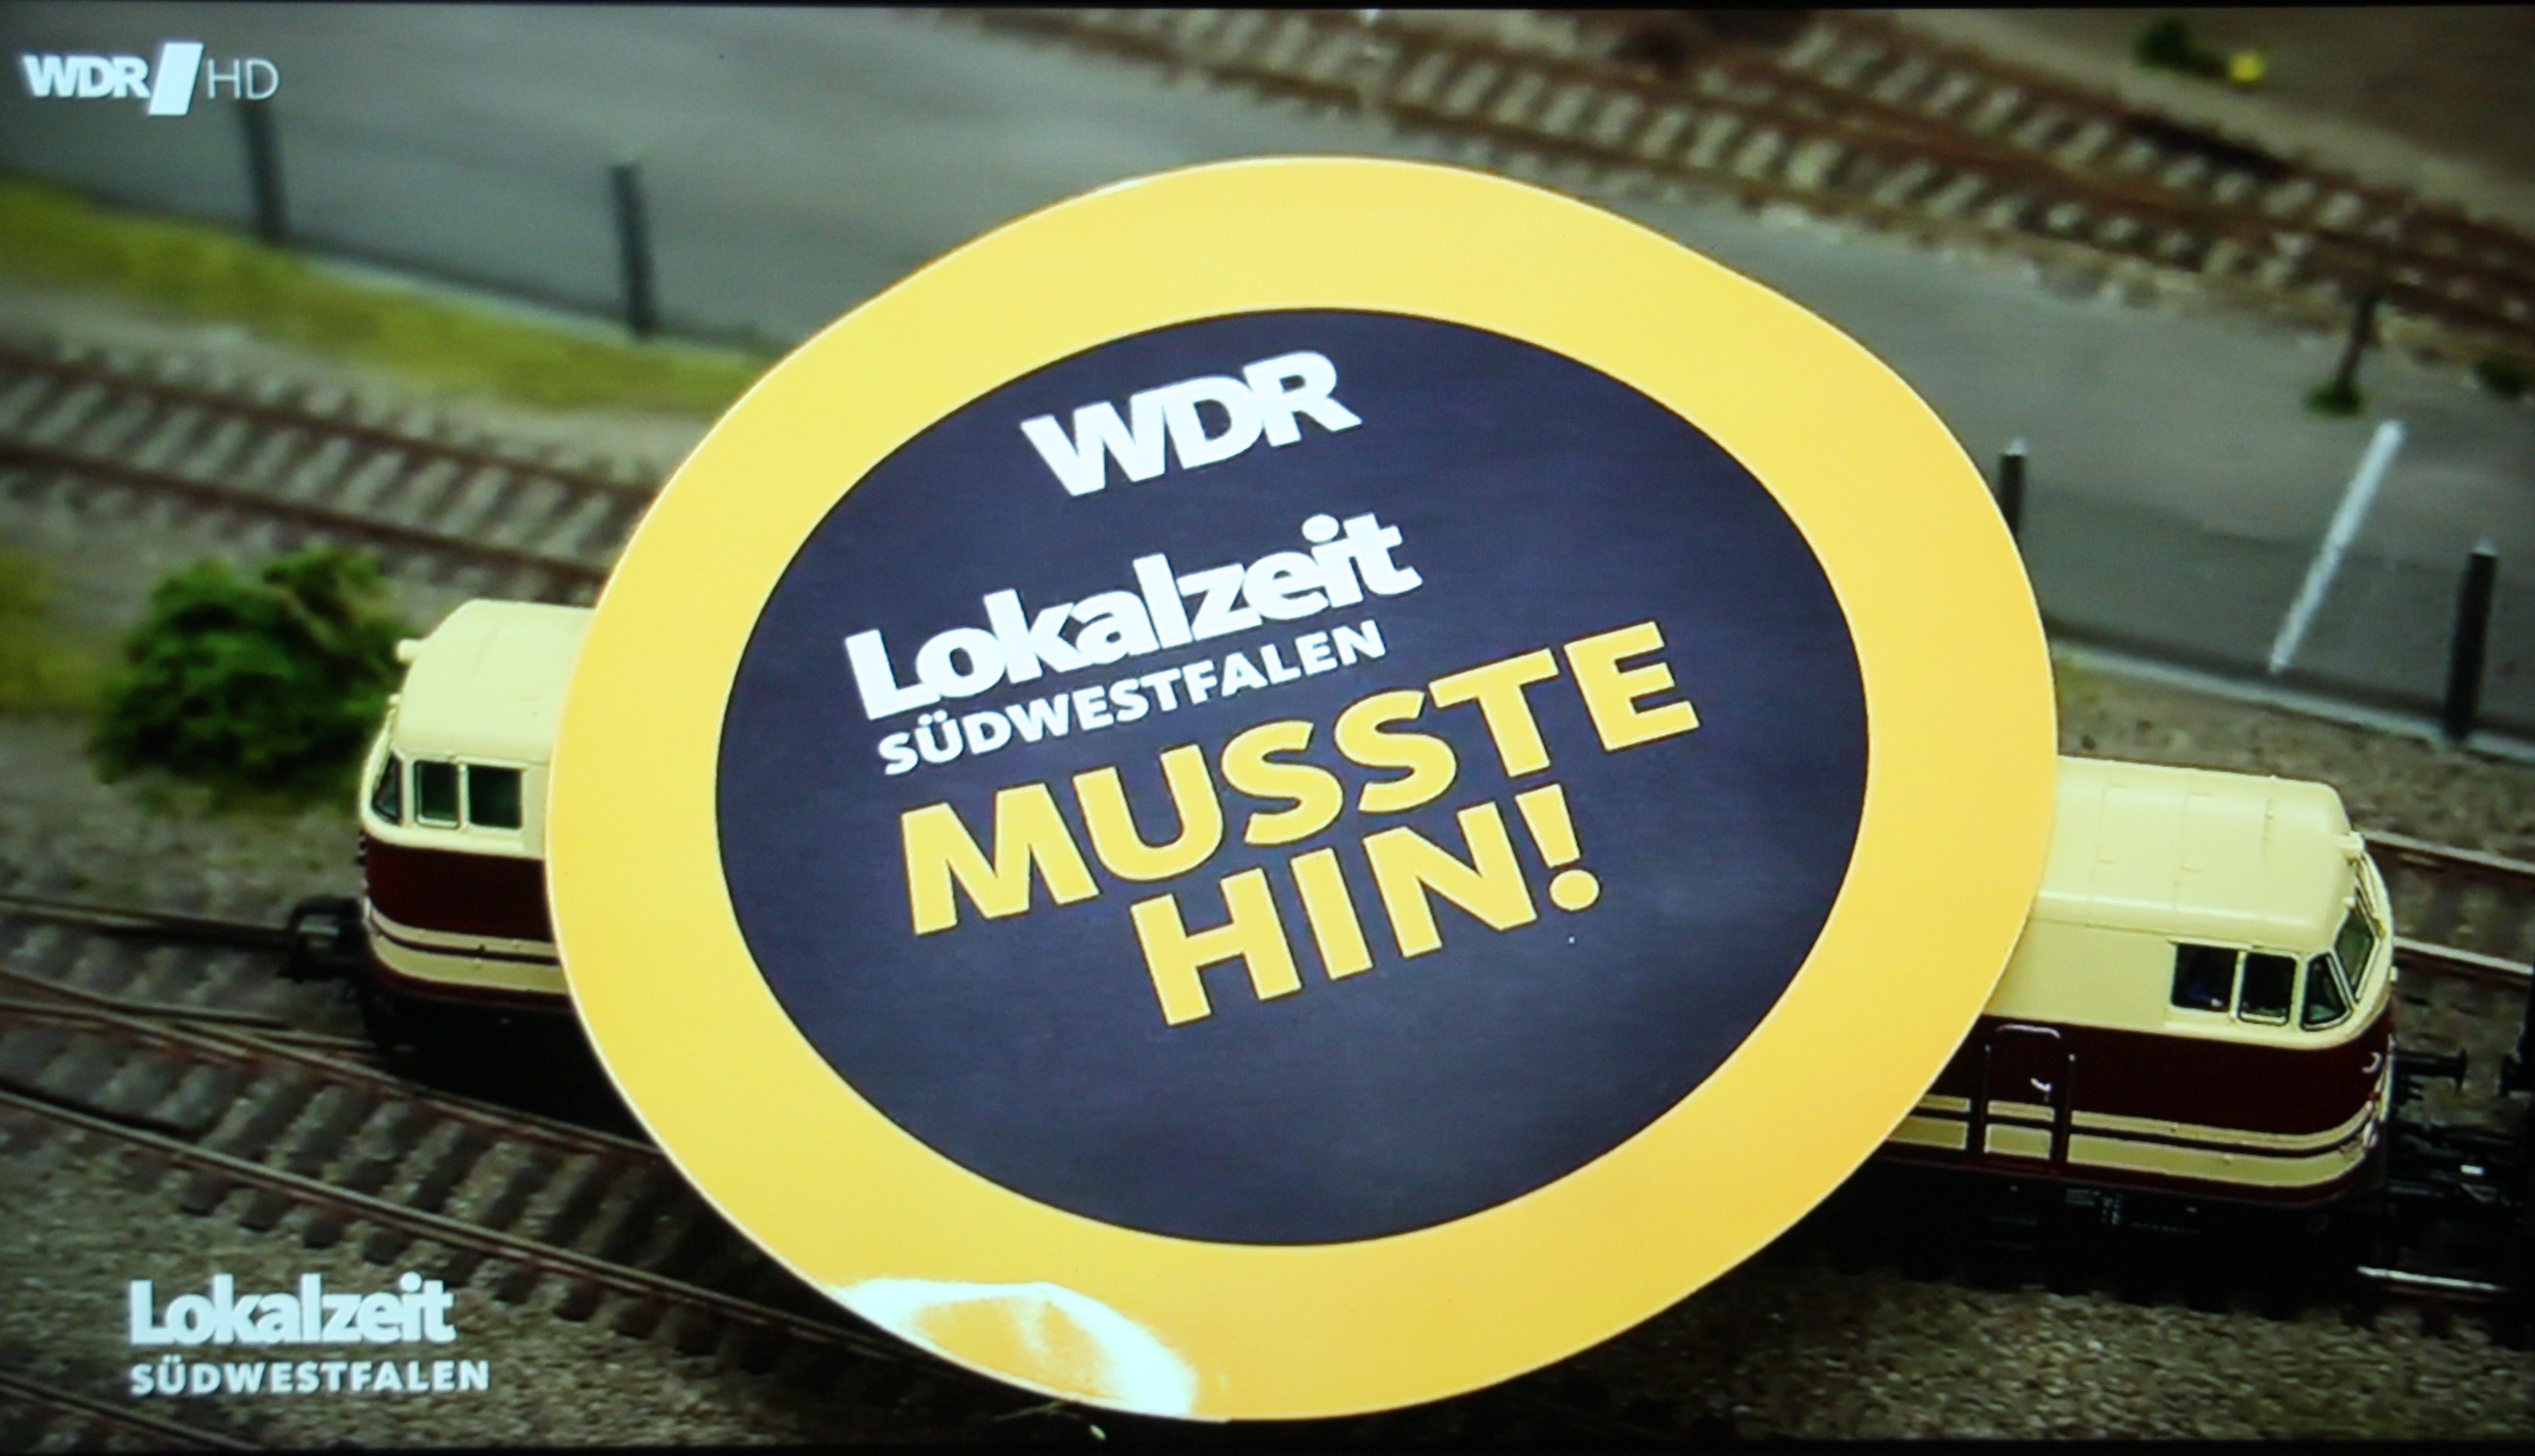 231124 010 WDR Musste hin bearbeitet